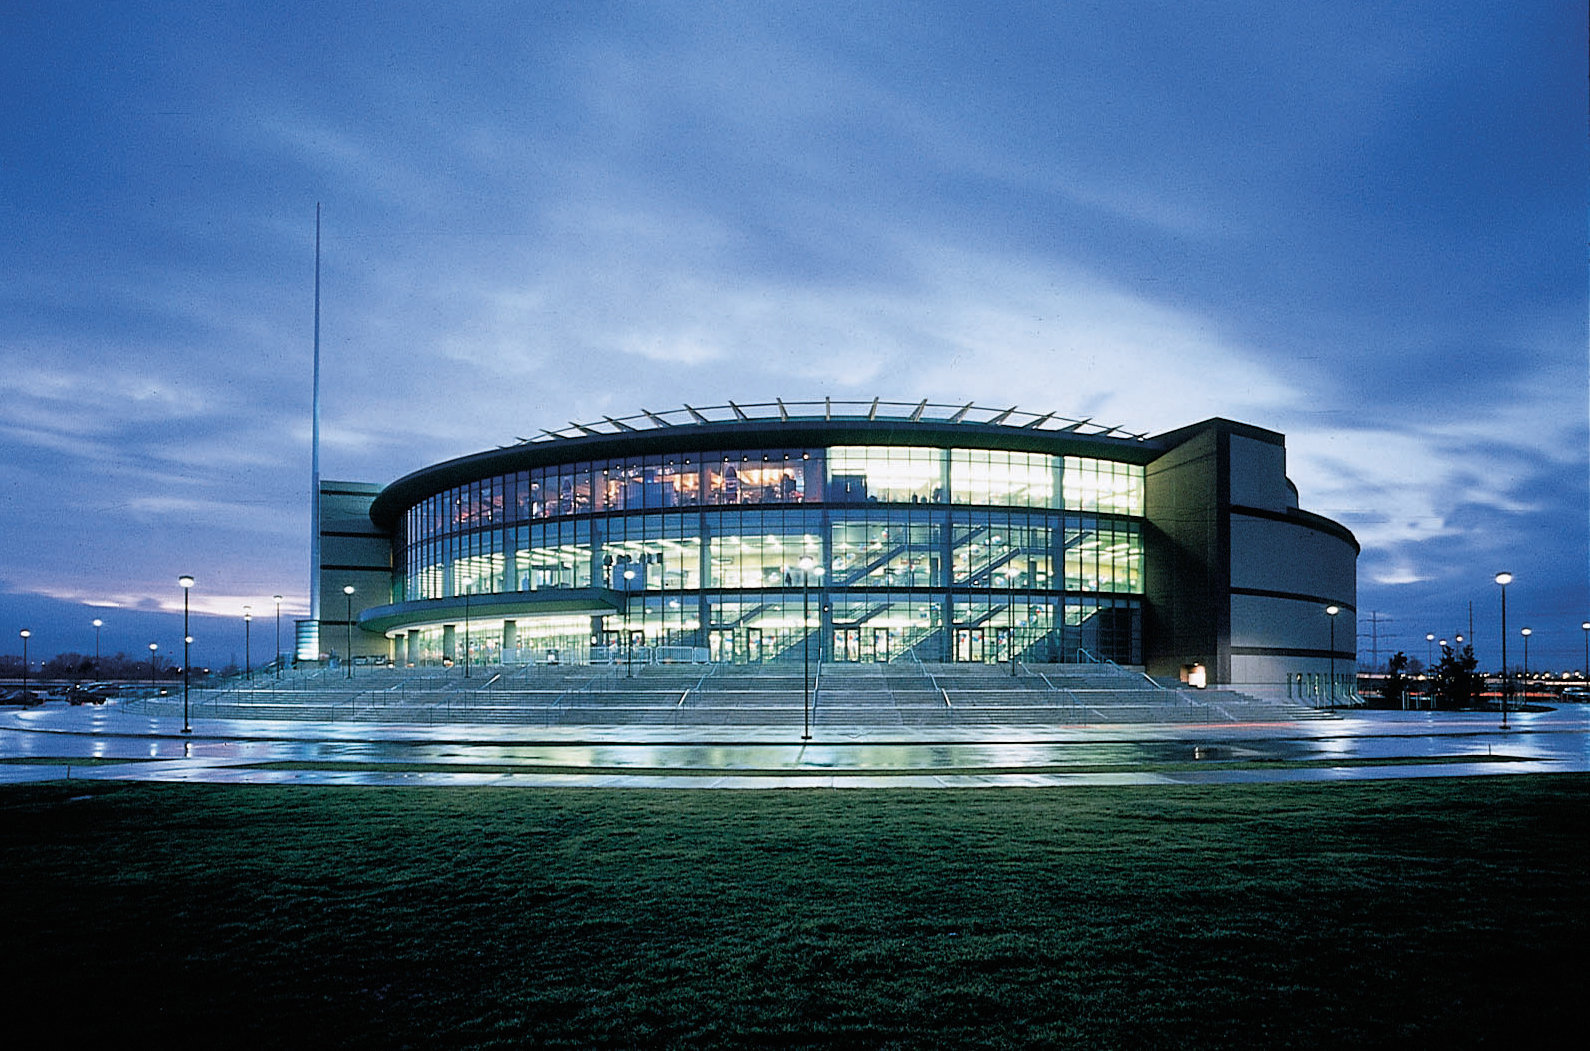 Home of the Utah Grizzlies - Maverik Center, West Valley City